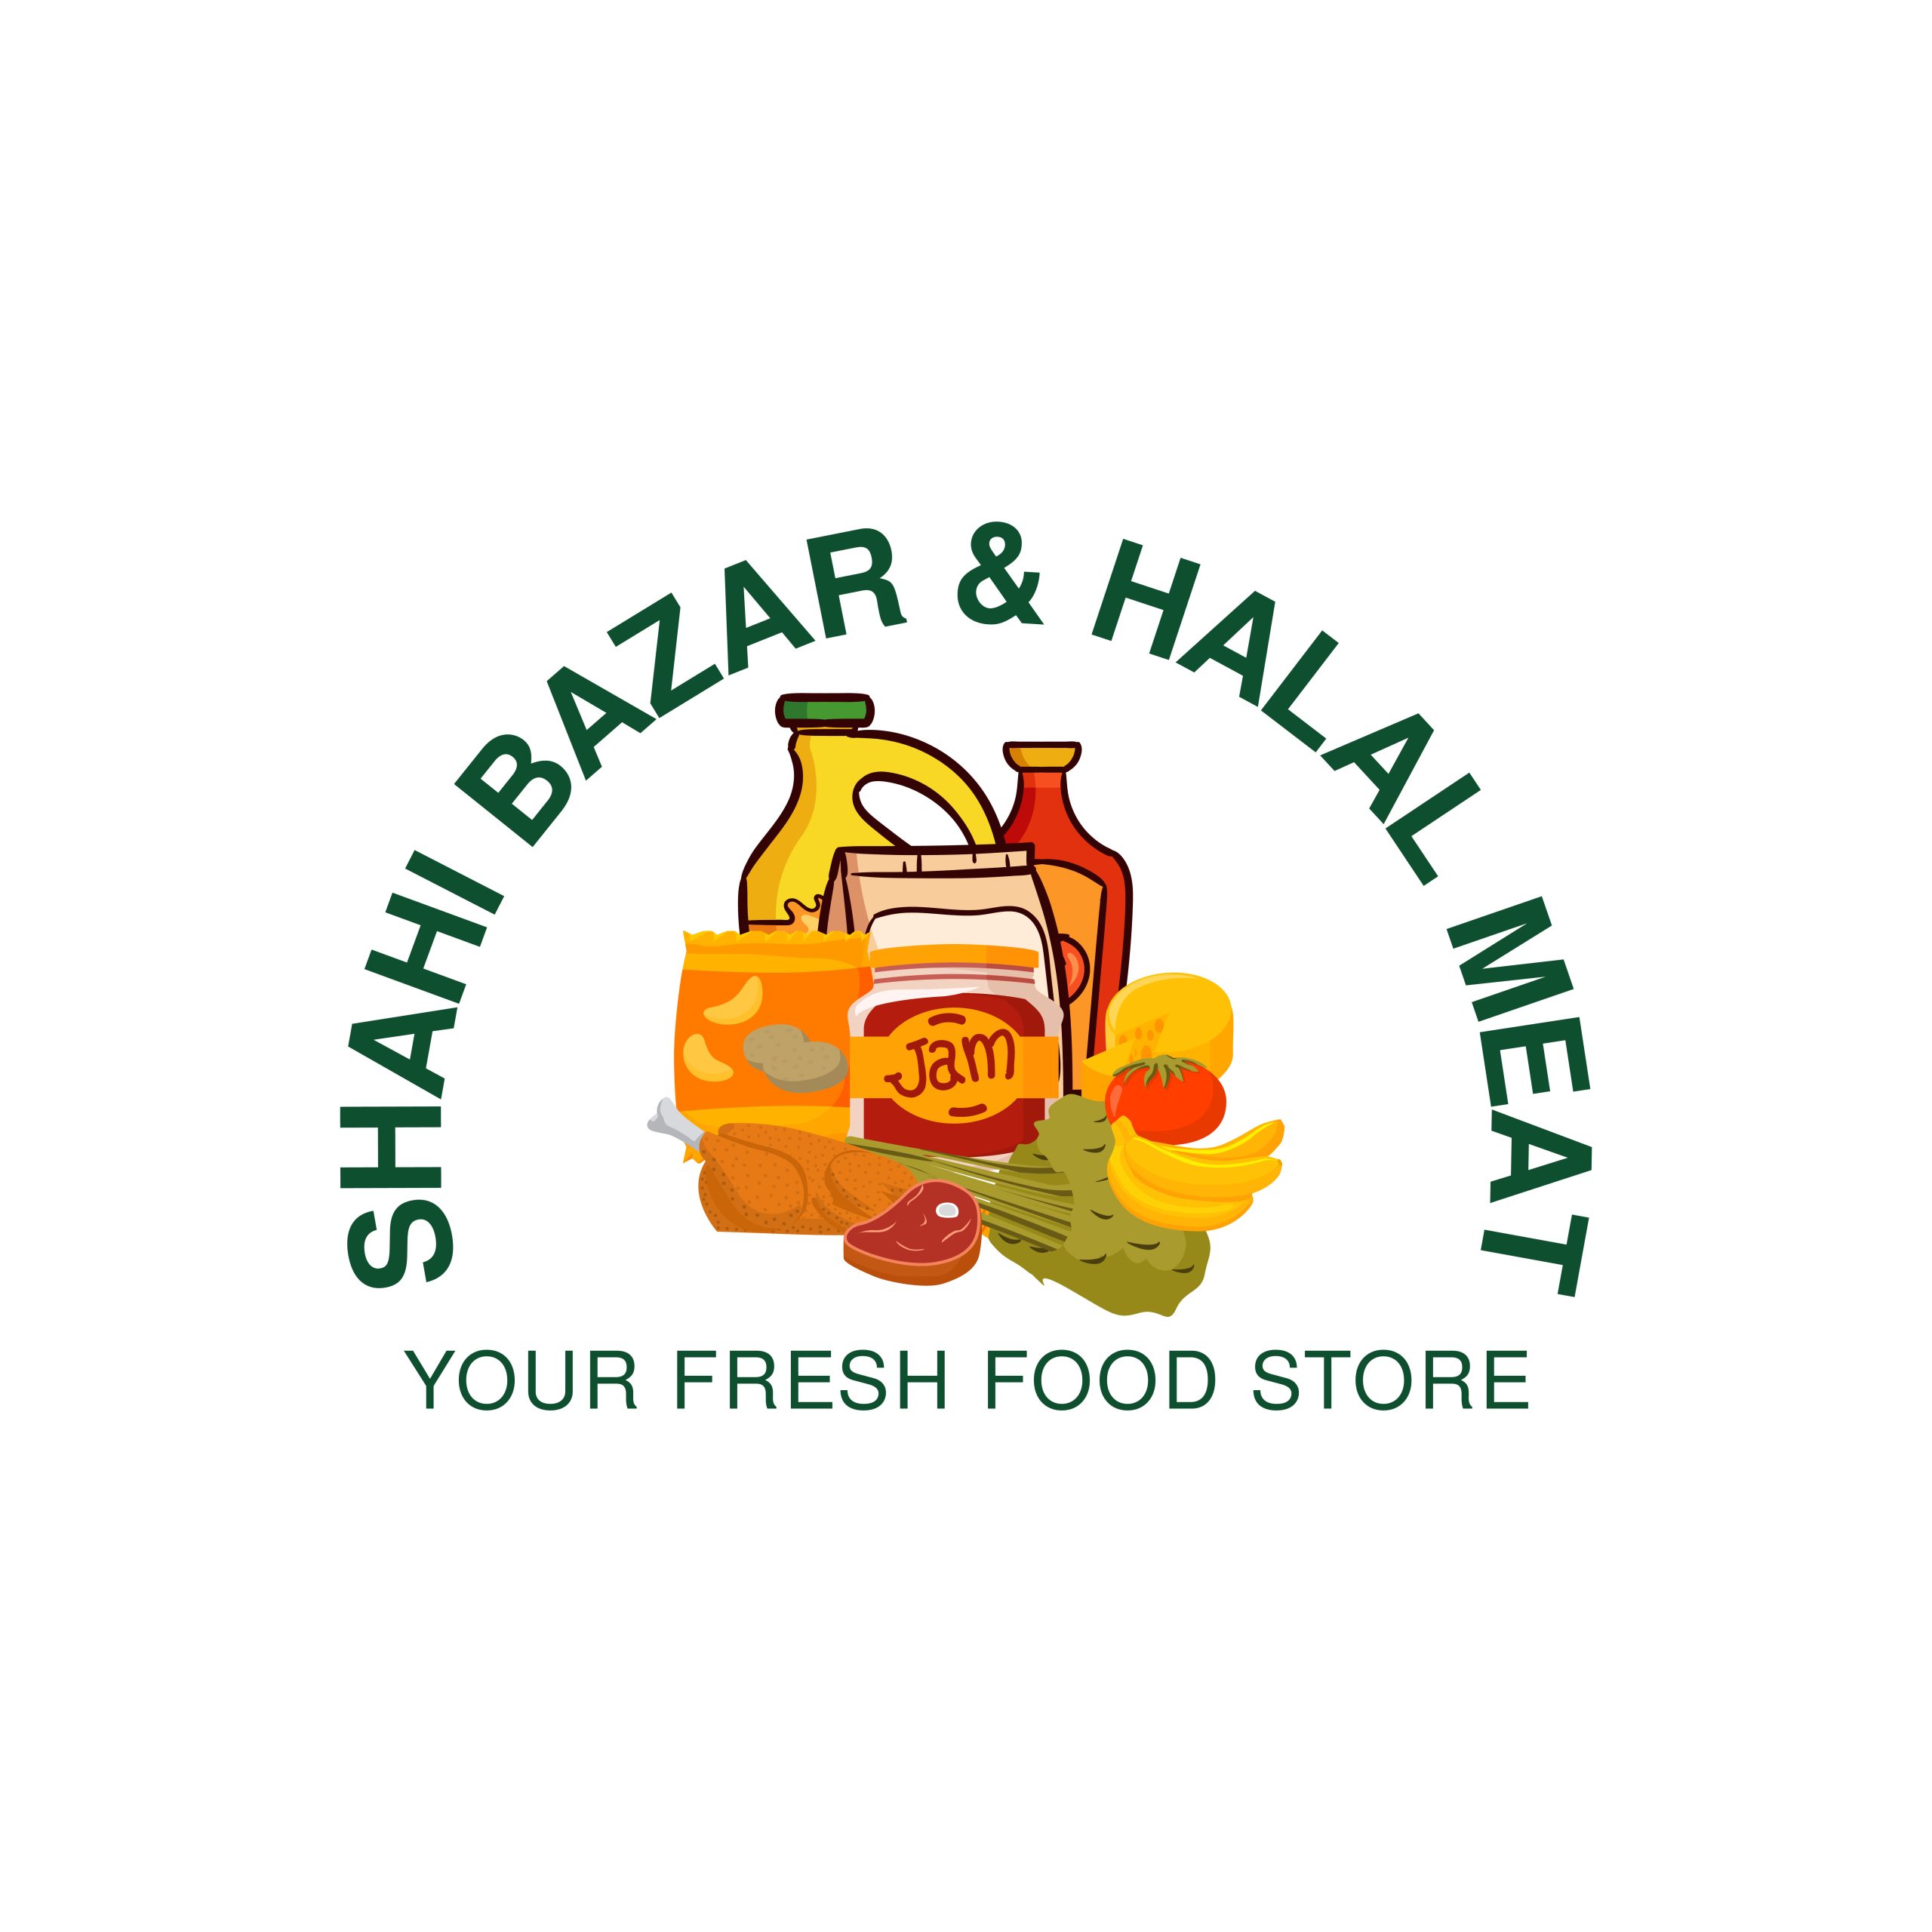 Shahi Bazar & Halal Meat